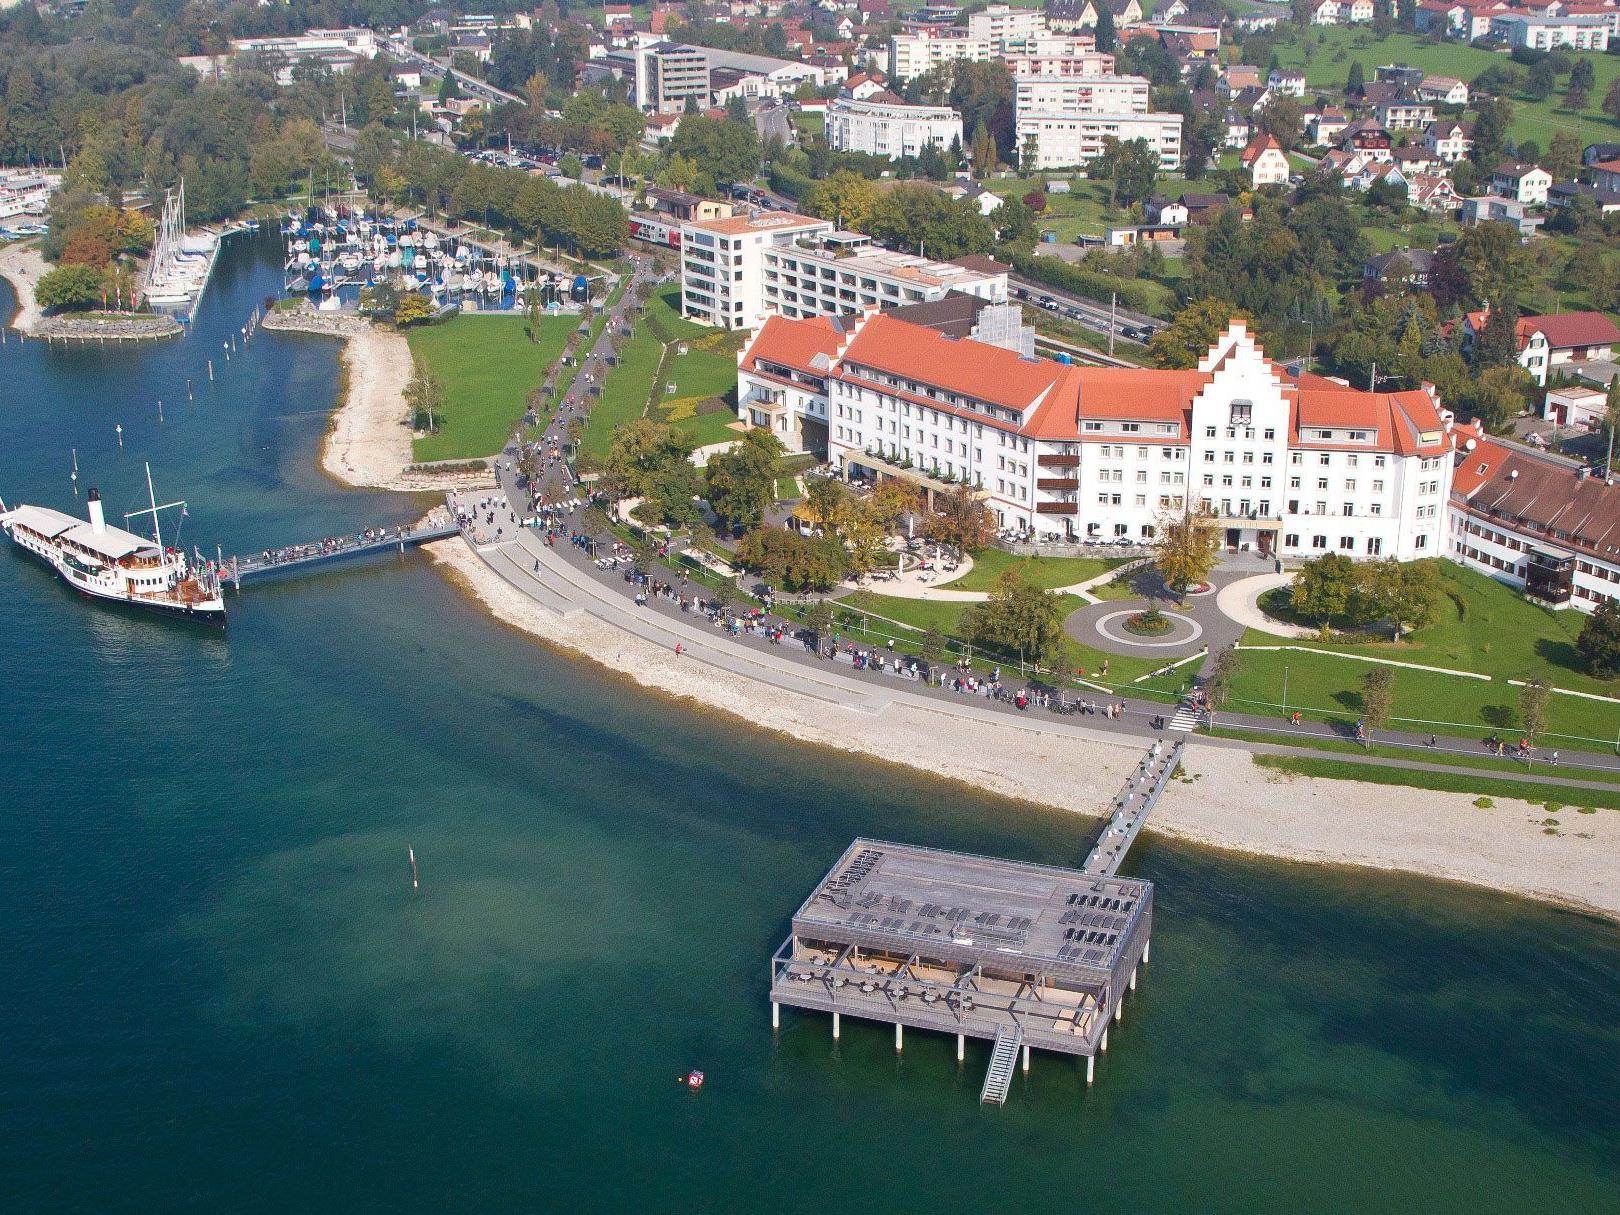 Luftbildaufnahme des Seehotels "Am Kaiserstrand".